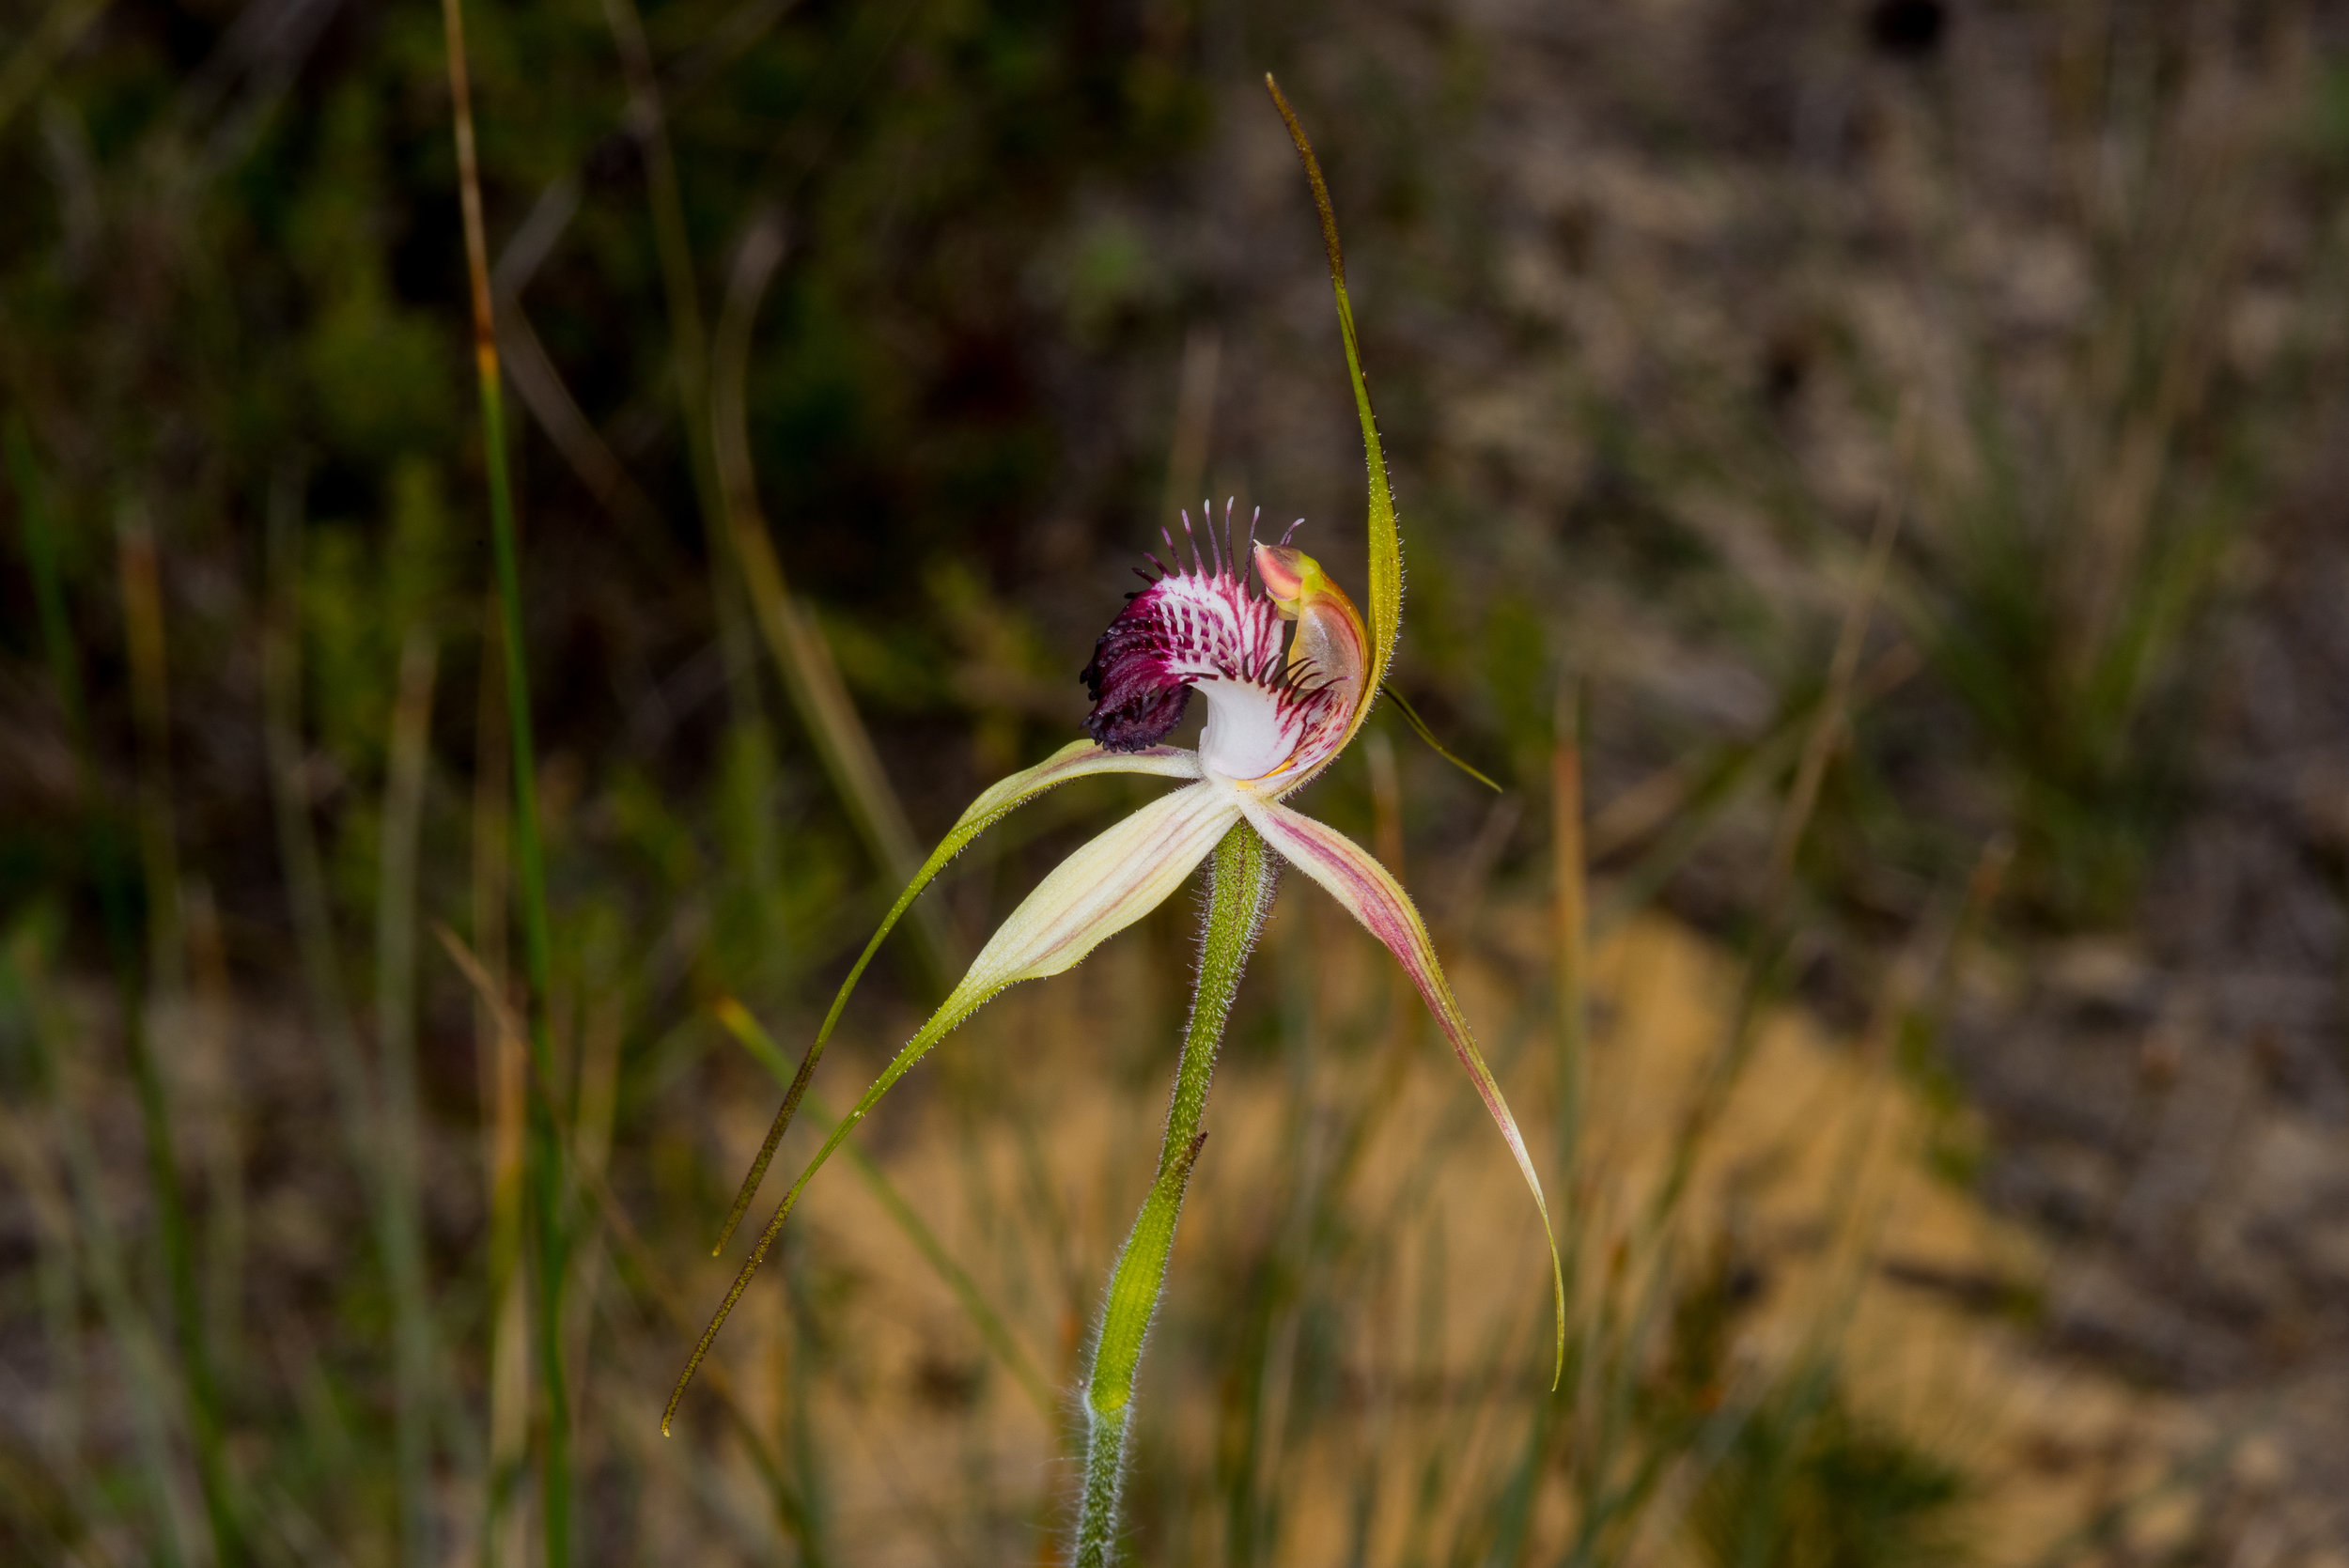  Caladenia georgei - Tuart spider orchid, Wireless Hill, Perth 